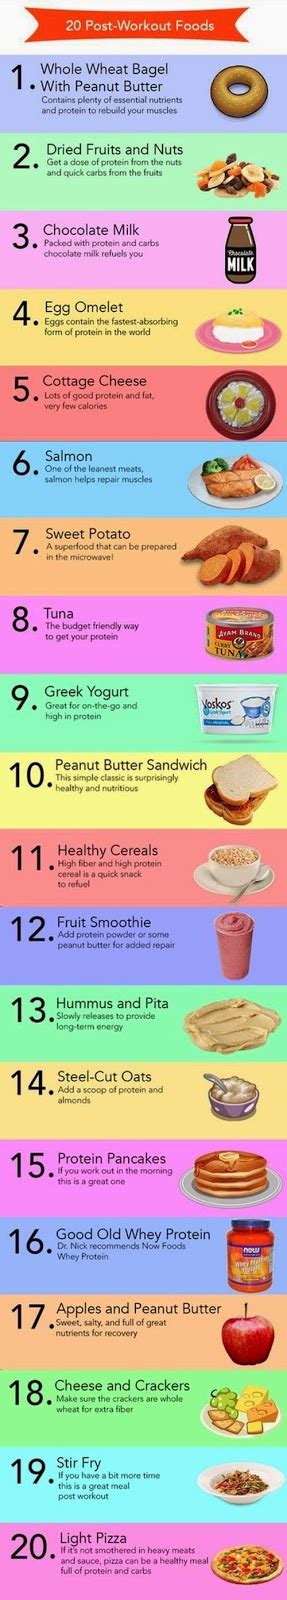 Green Diet 20 Post Workout Foods